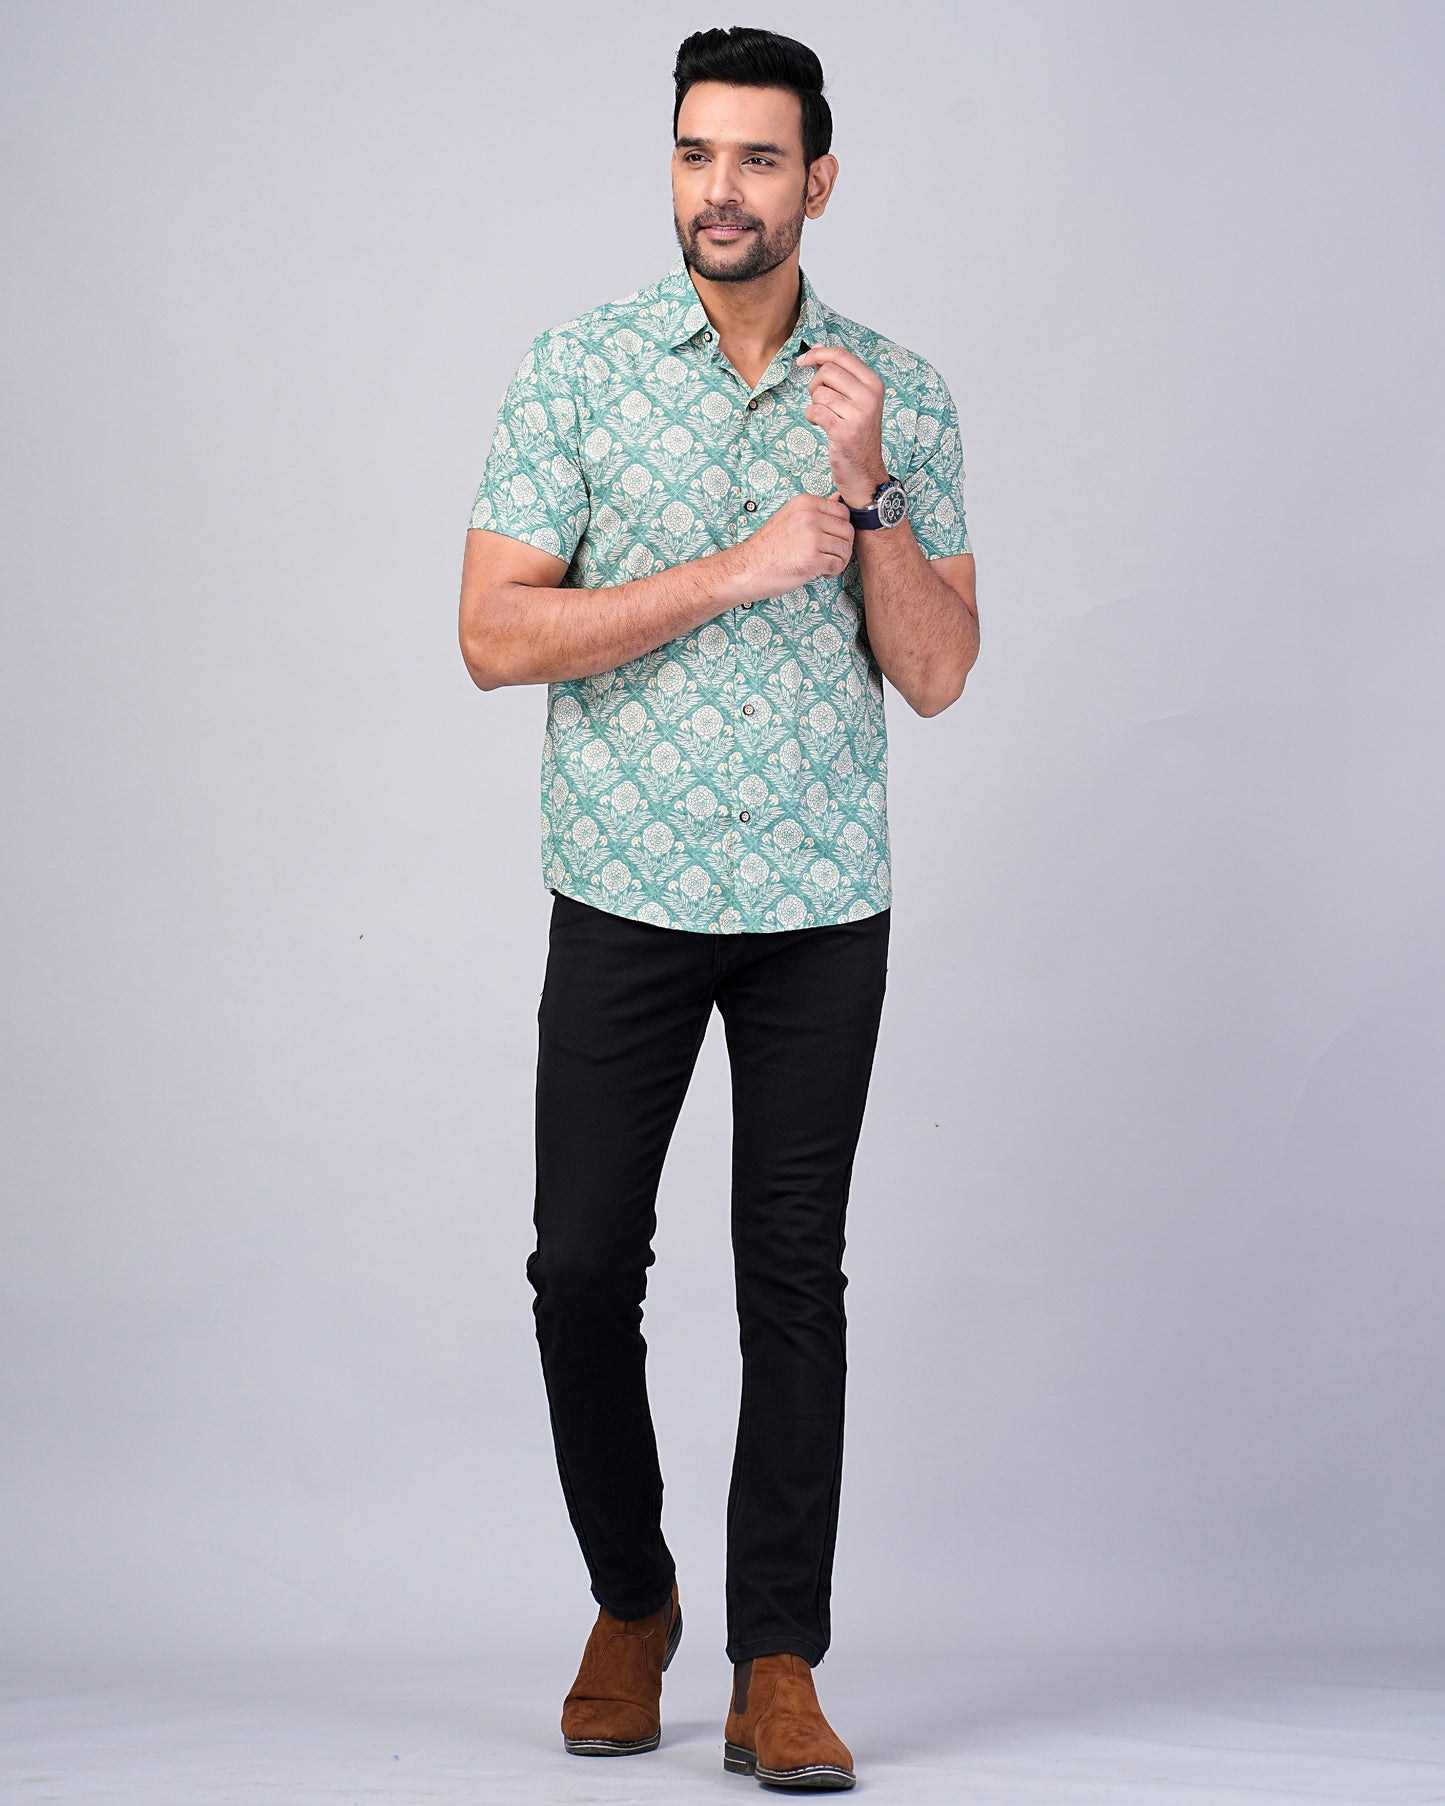 Men's Floral Printed Half-Sleeves shirts